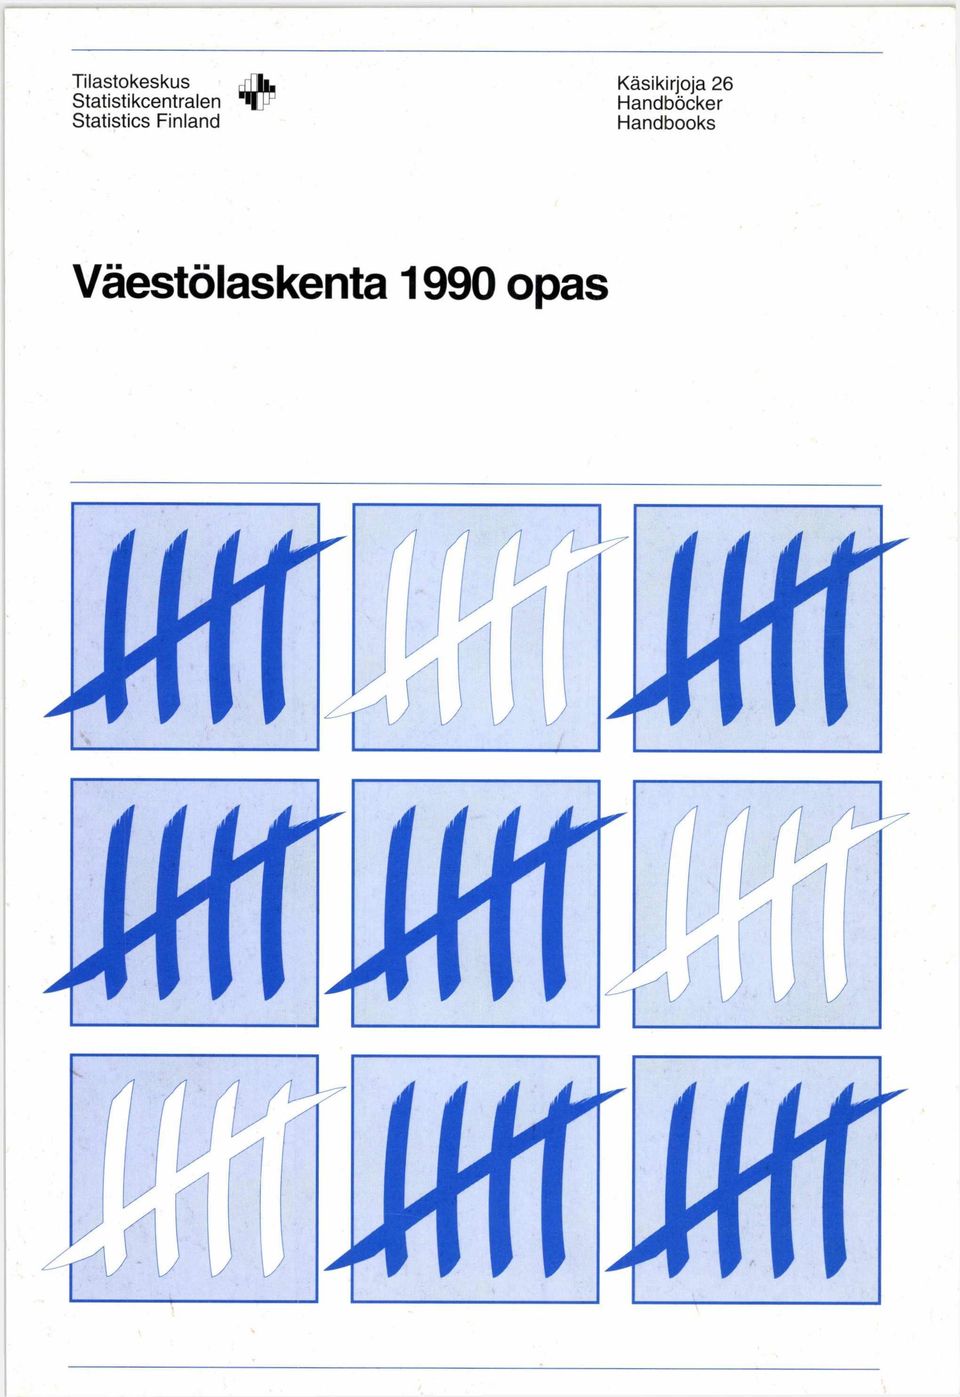 Statistics Finland